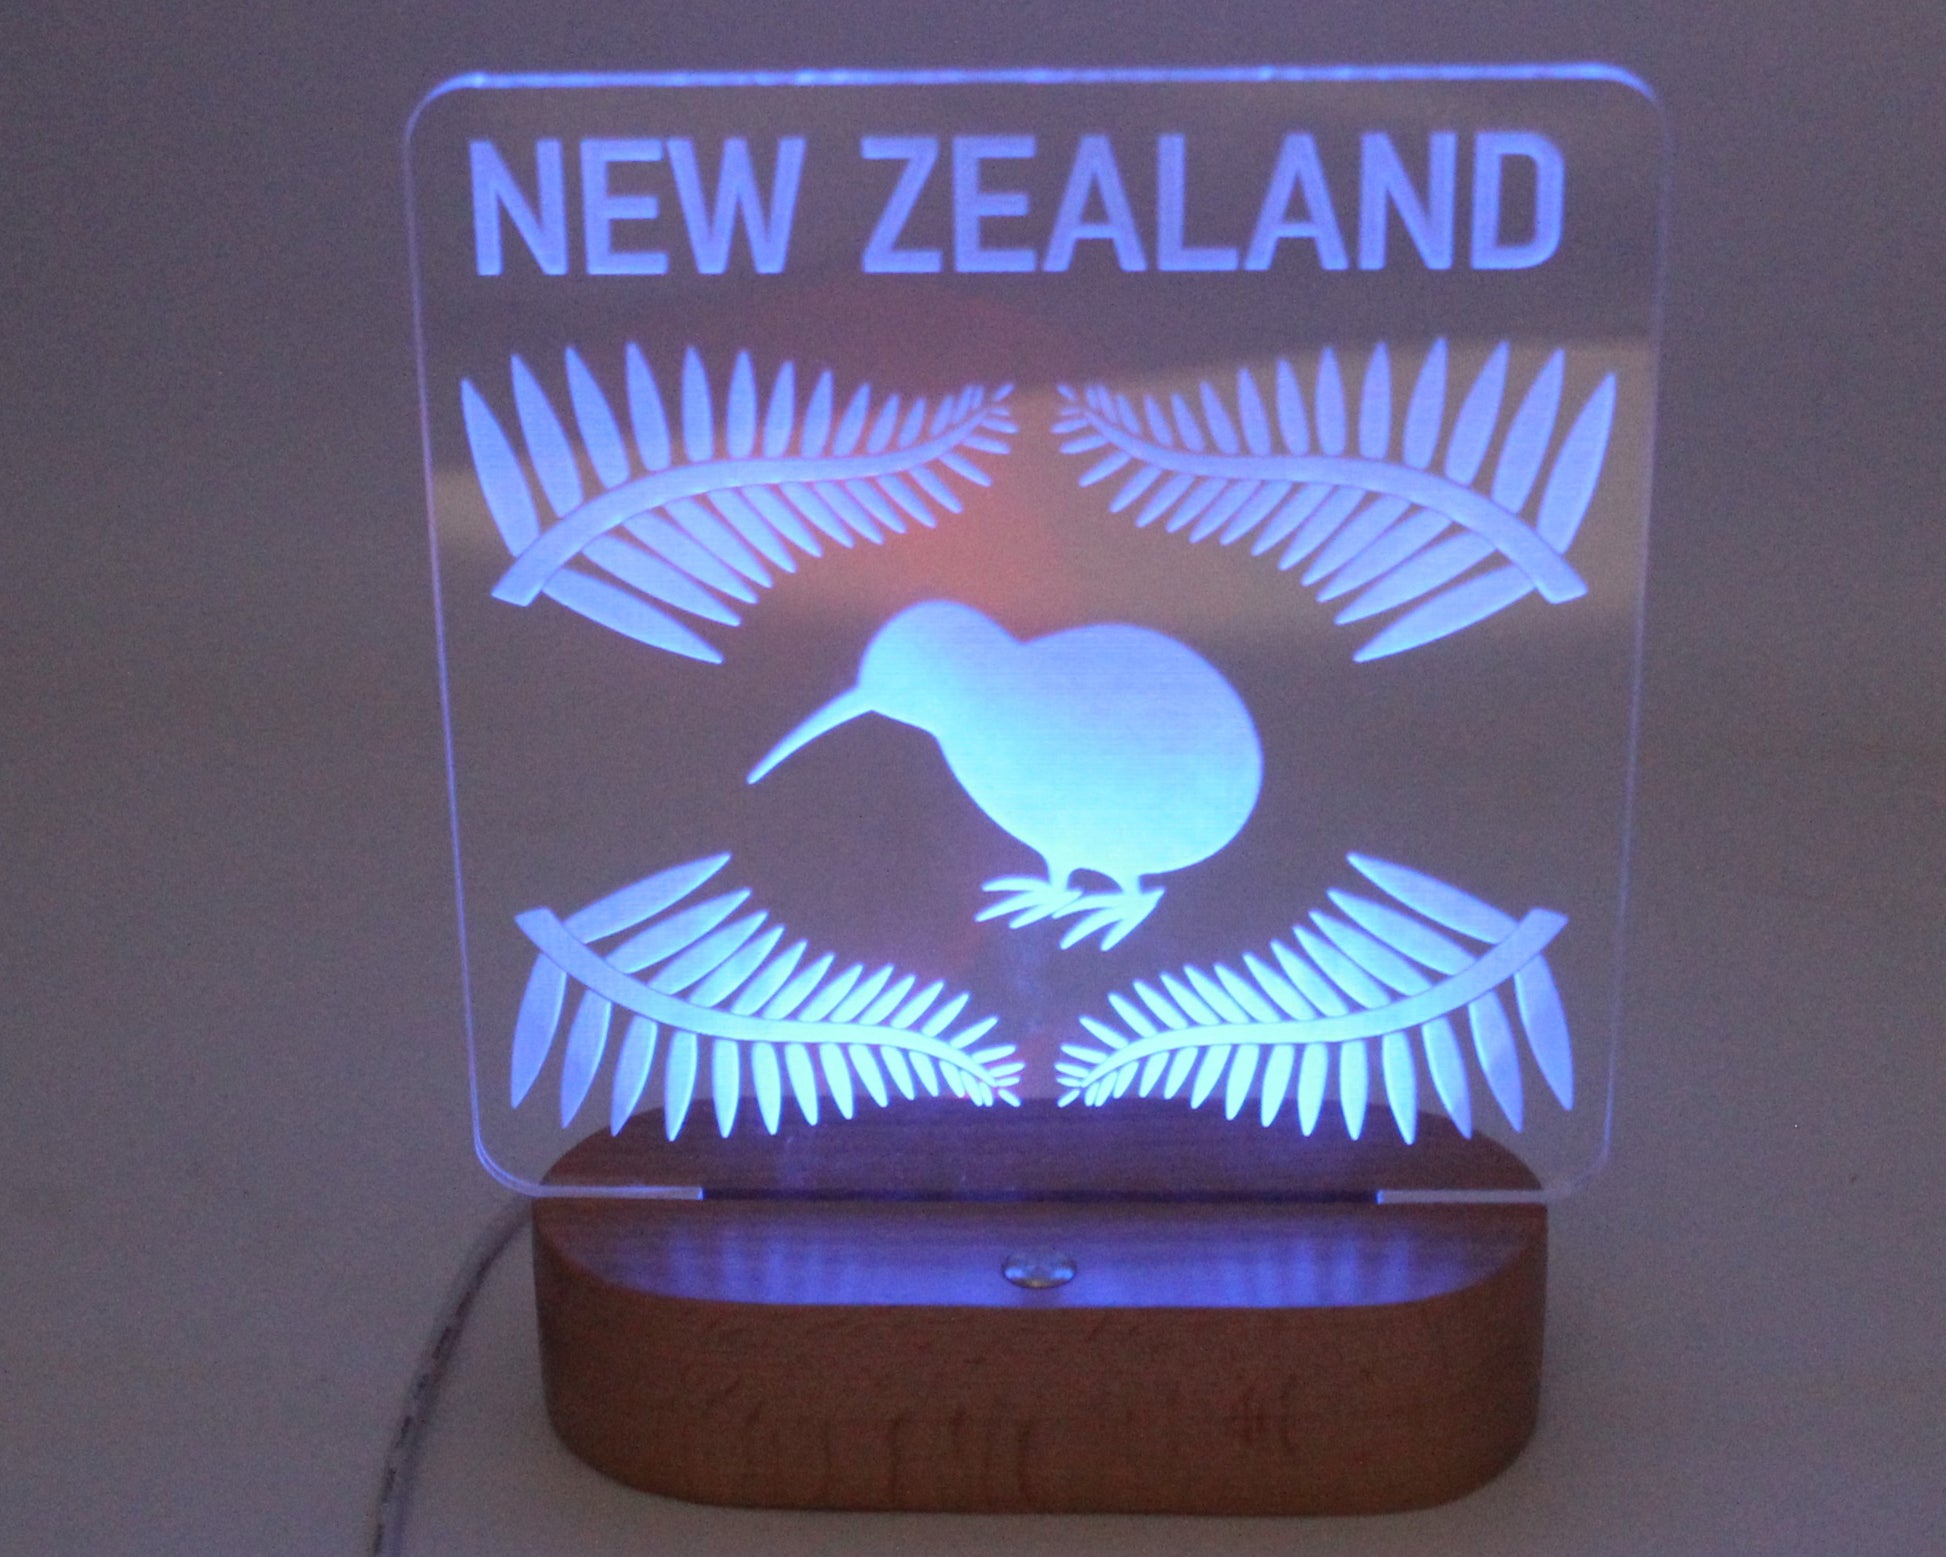 New Zealand Night Light - Haisley Design